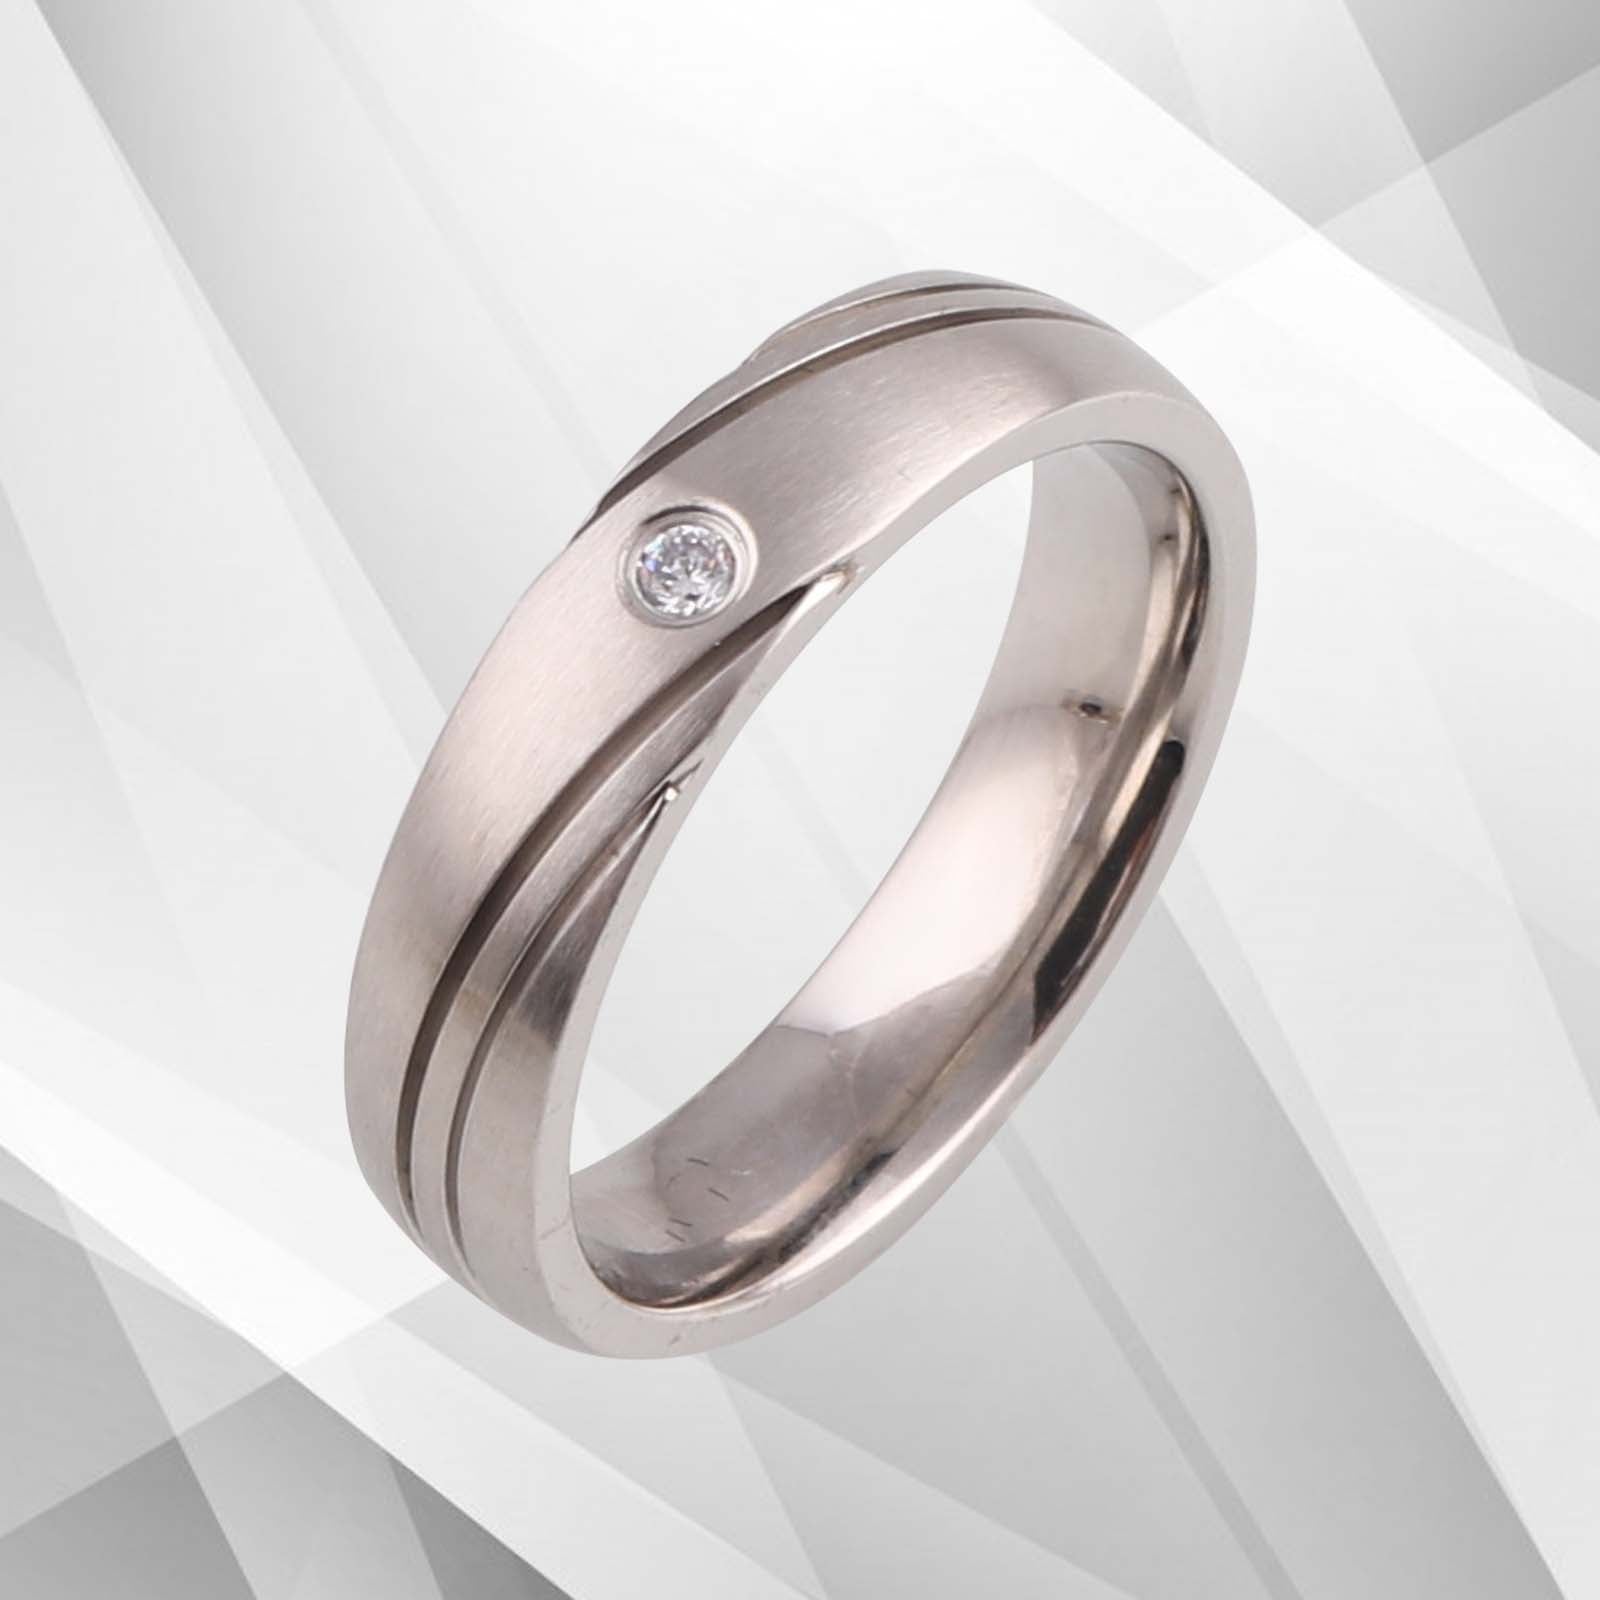 Stylish 5mm Titanium CZ Diamond Ring - 18Ct White Gold Finish - Women's Band for Engagement, Wedding, Anniversary - Comfort Fit - NDFK12A - Jewelry & Watches - Bijou Her -  -  - 